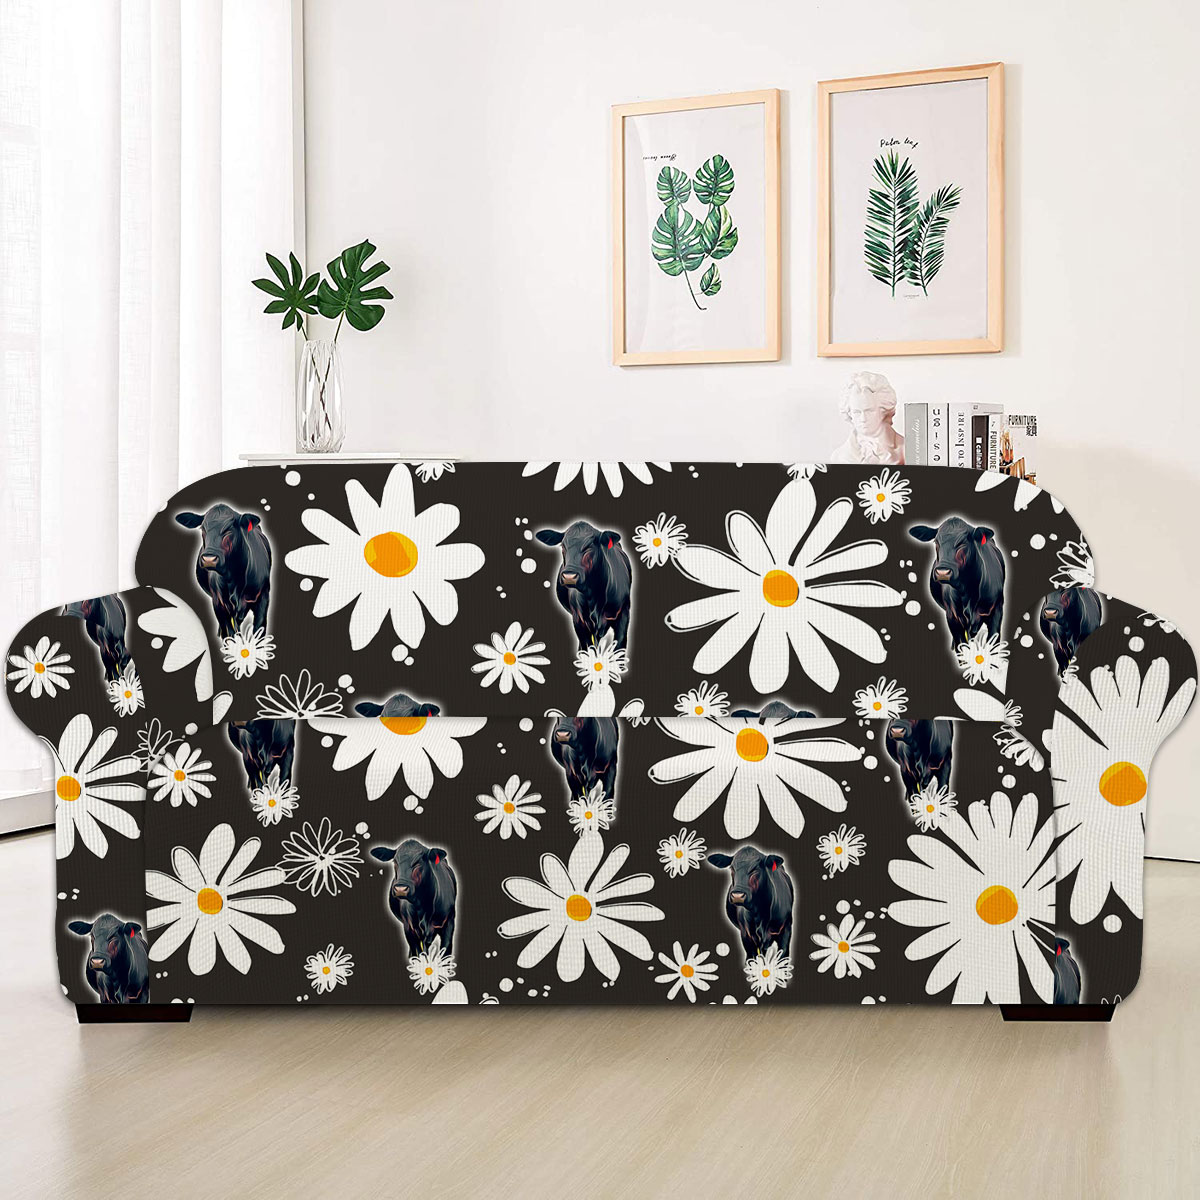 Black Angus Daisy Flower Pattern Sofa Cover